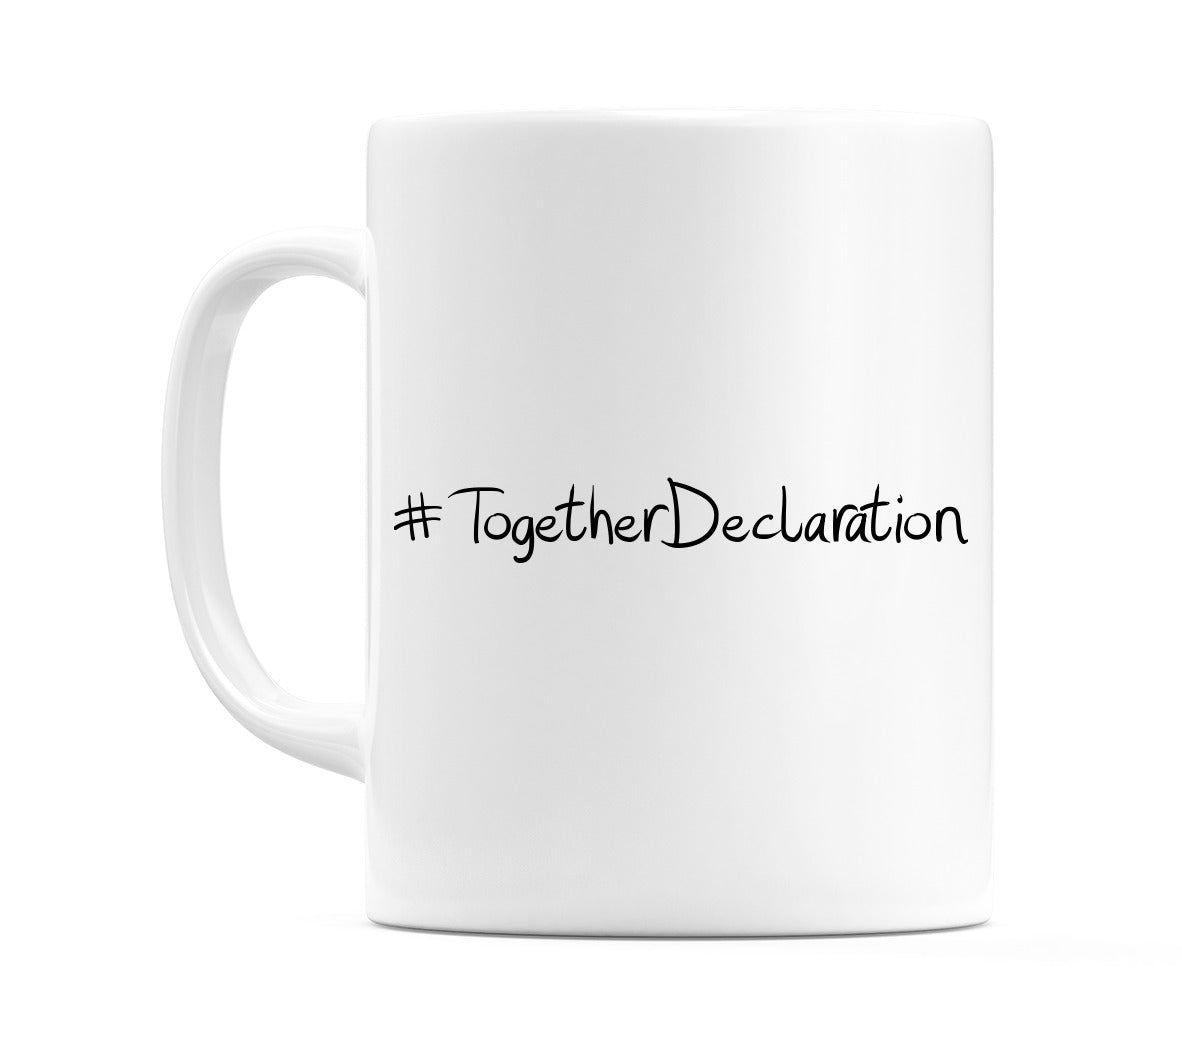 #TogetherDeclaration Mug